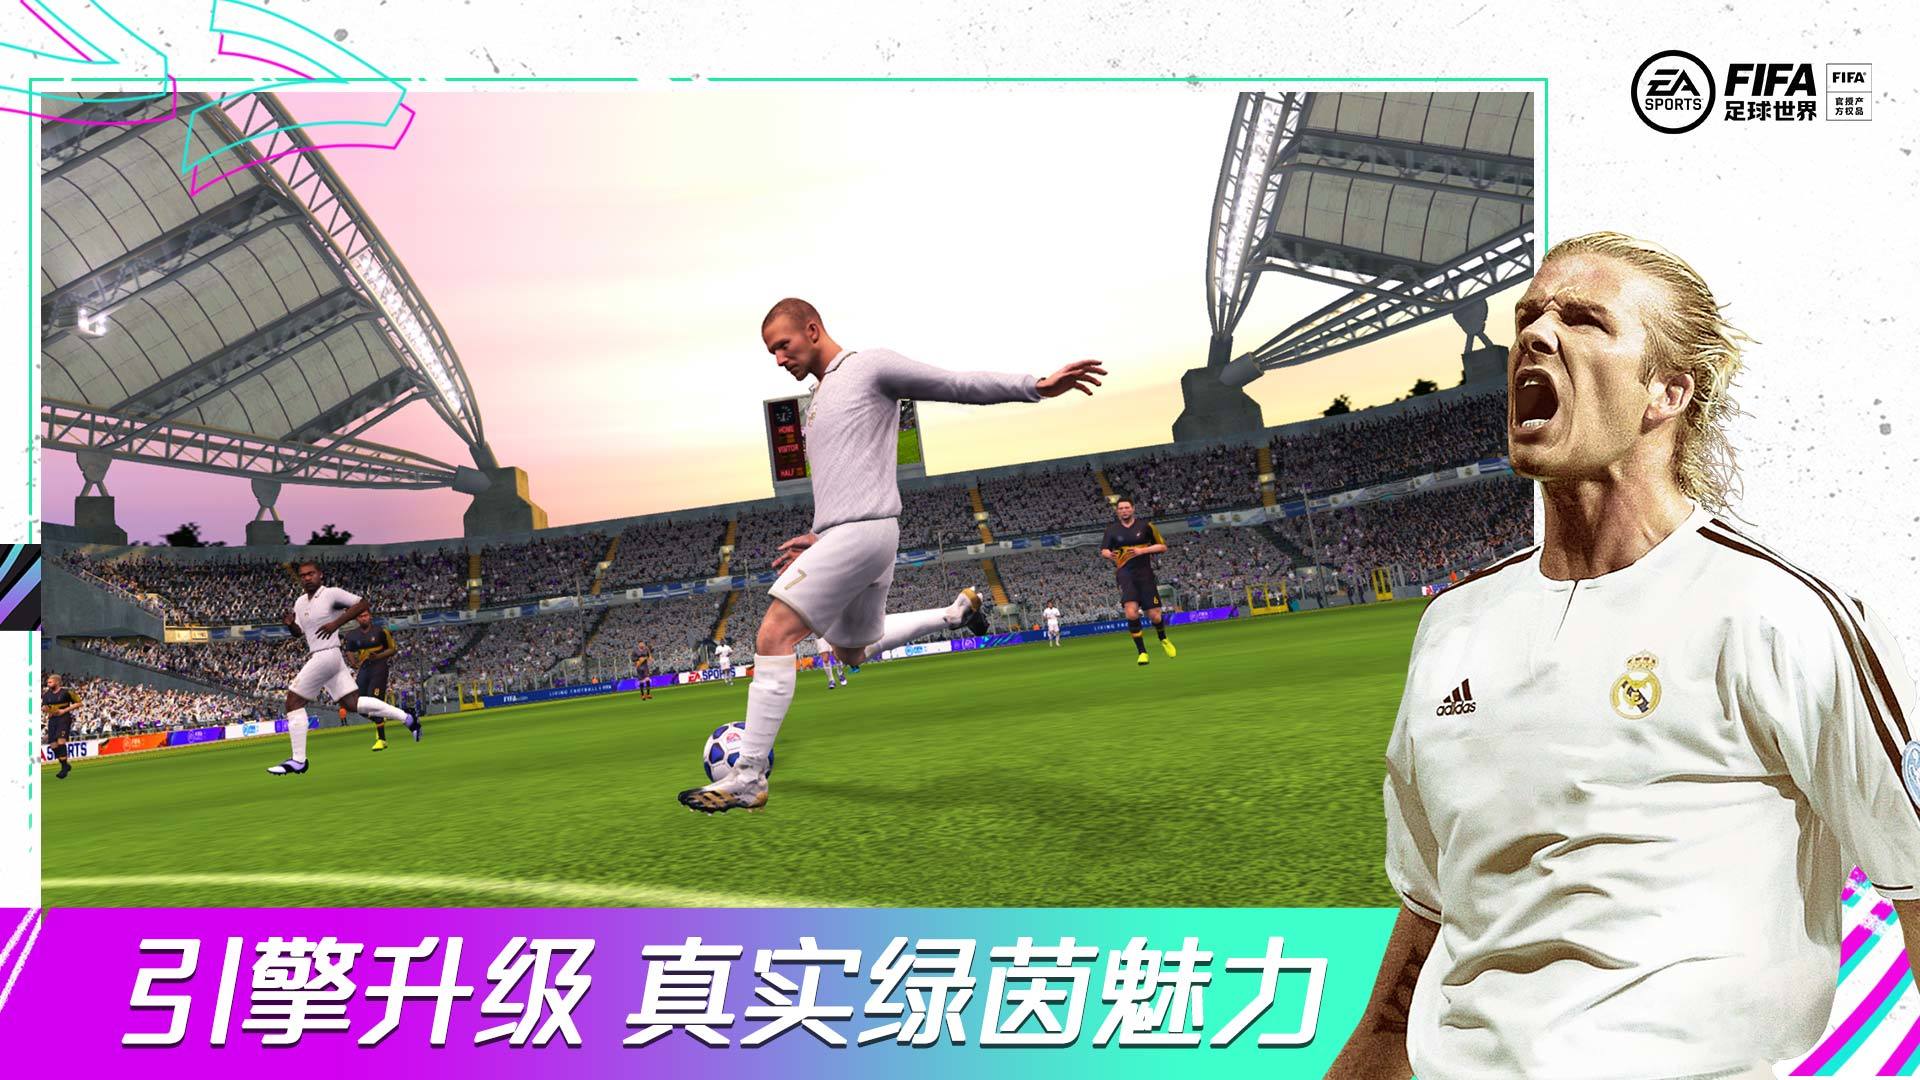 FIFA足球世界手游v22.0.05 安卓版